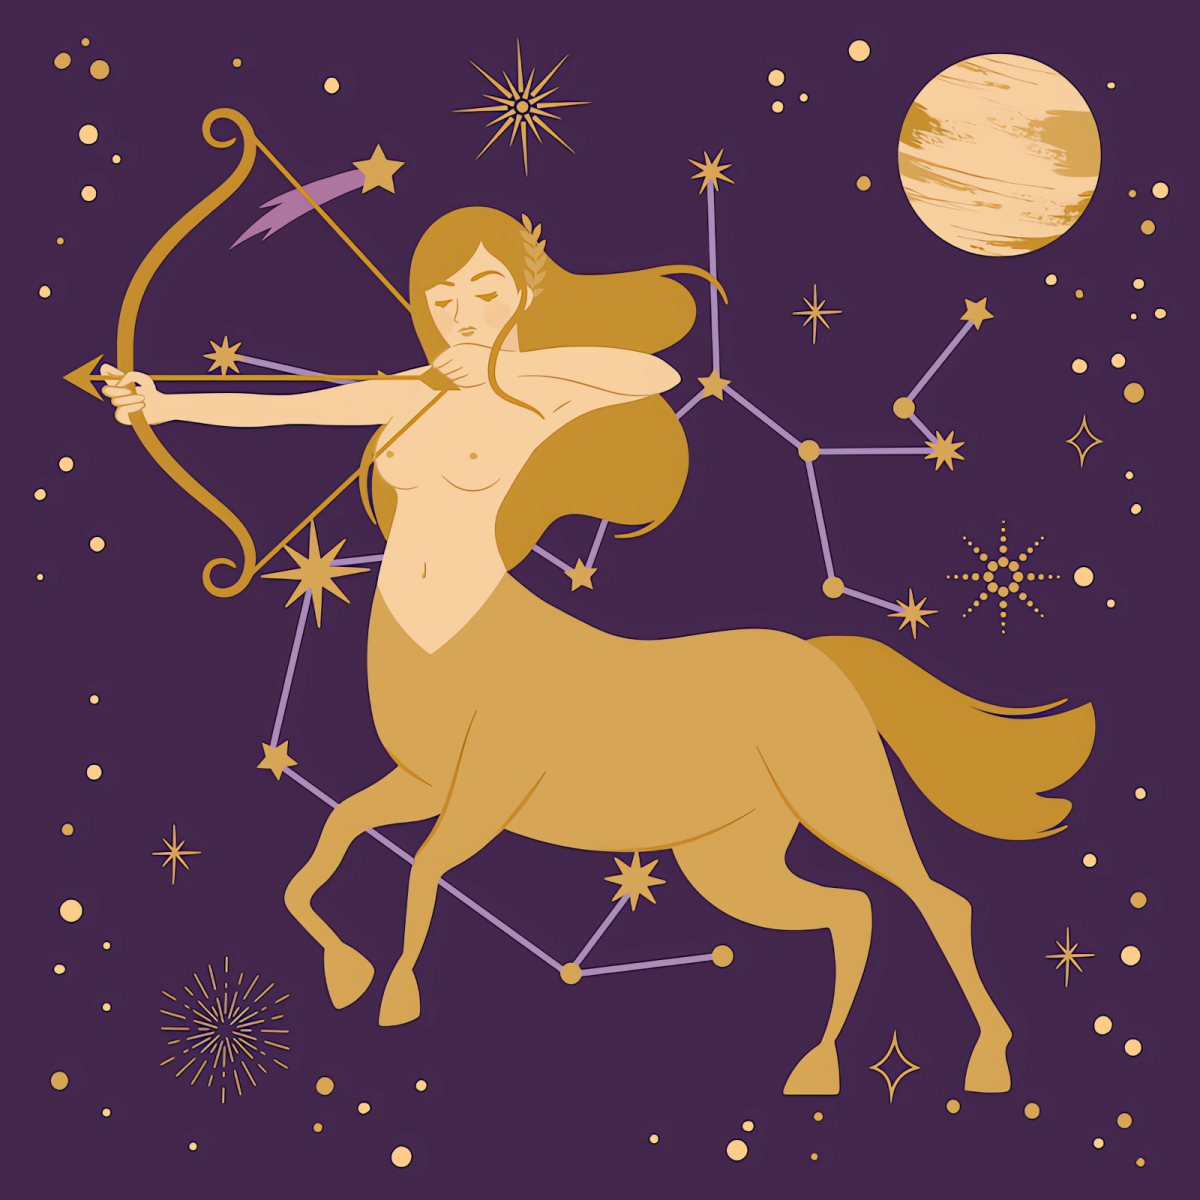 june tarot card sagittarius zodiac star sign